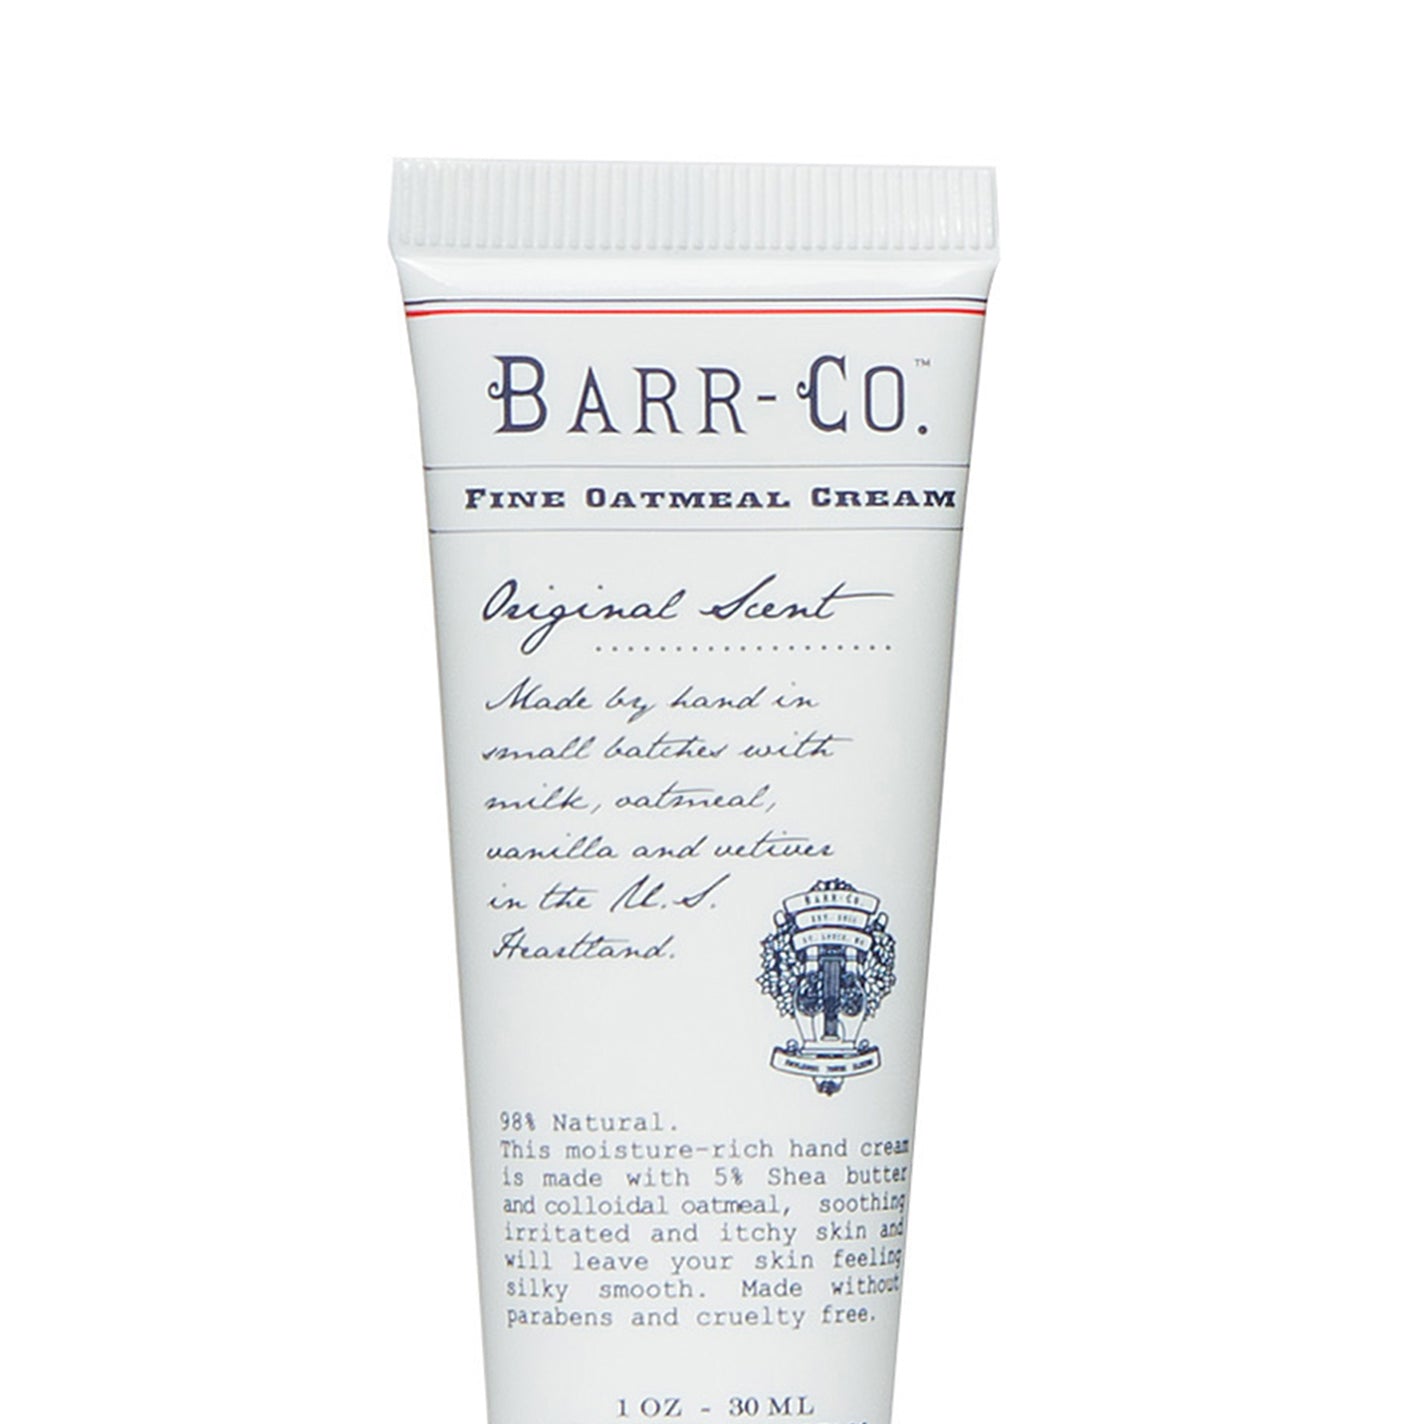 Barr-Co Original Mini Hand Cream